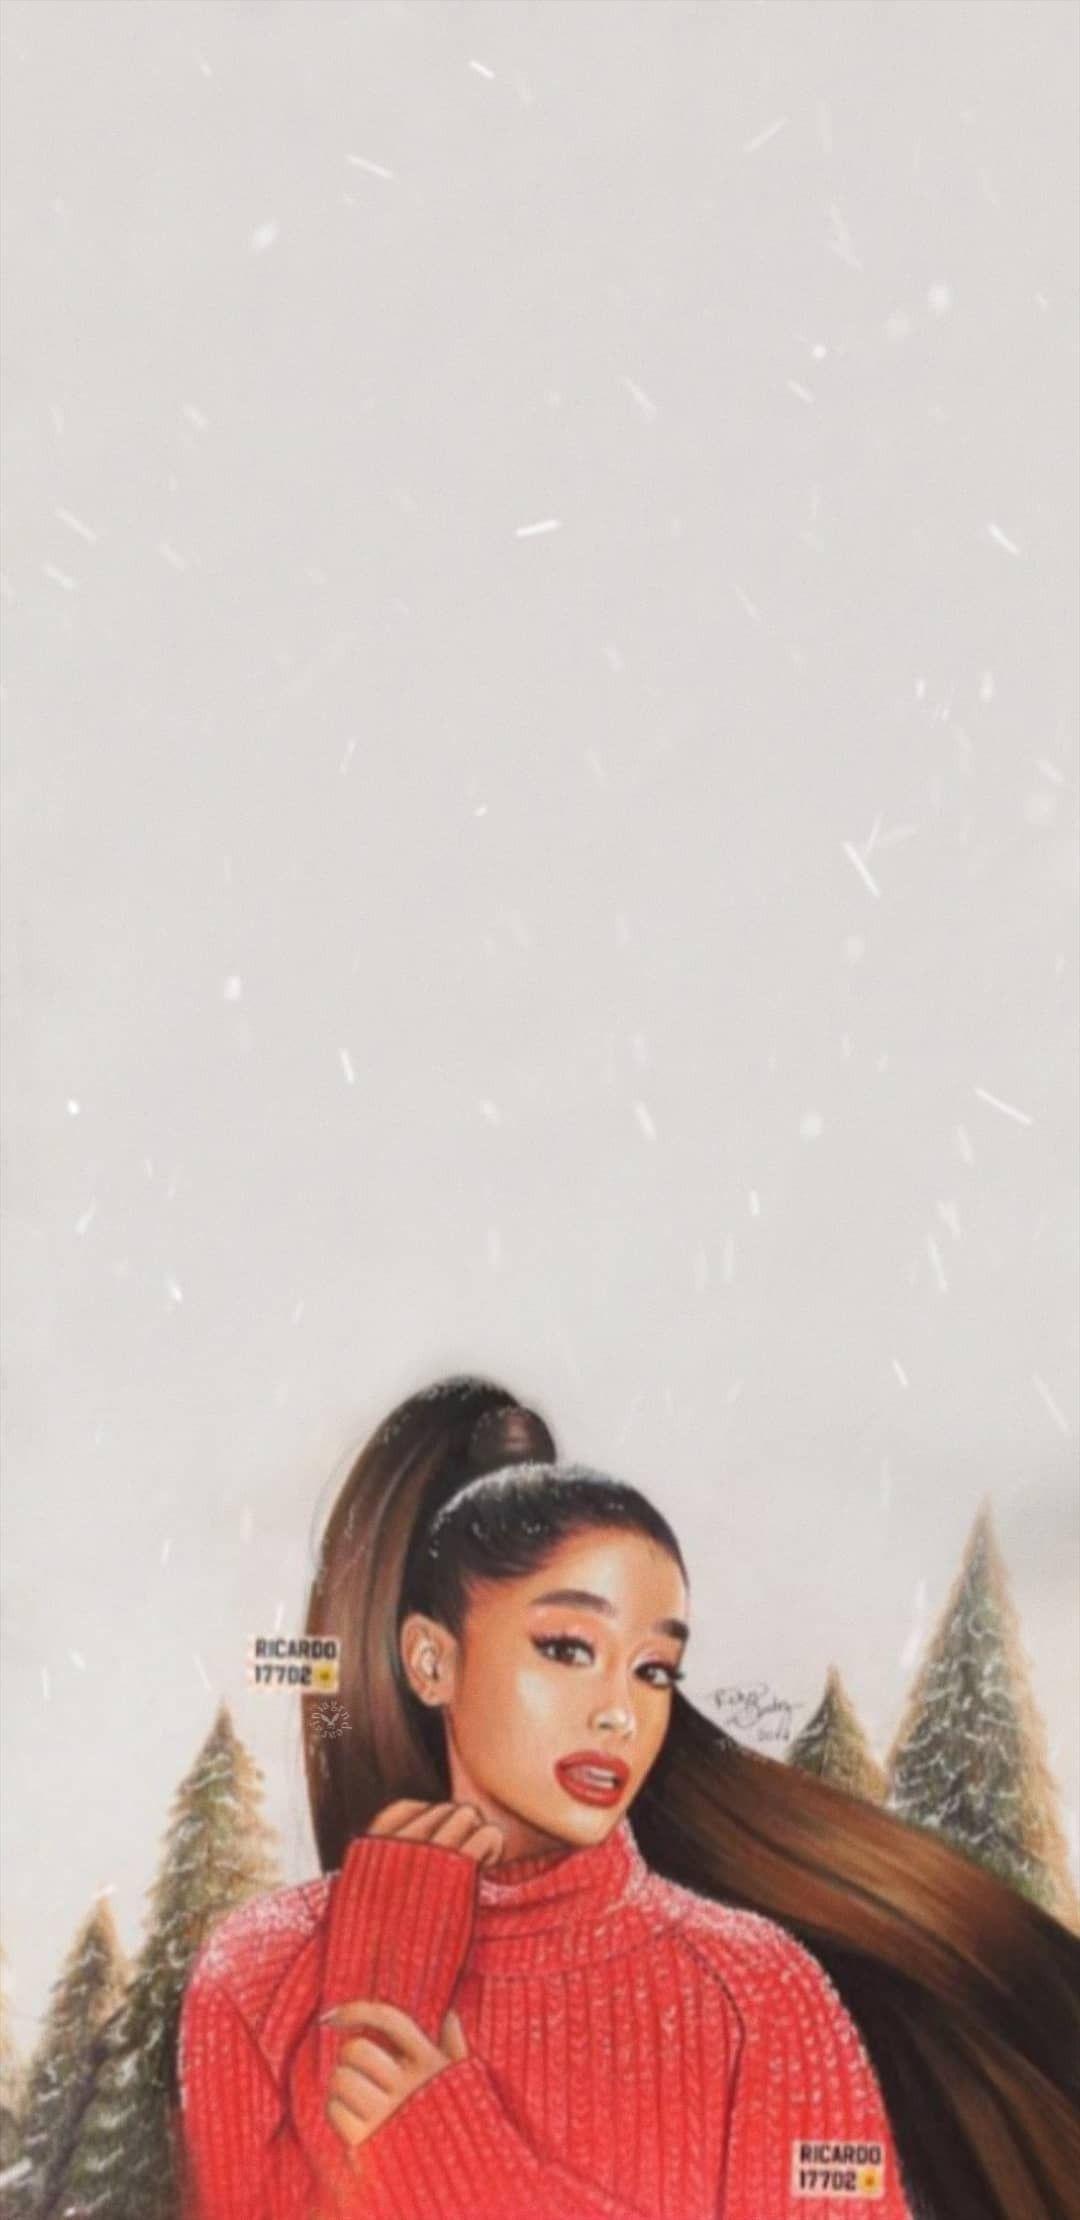 ariana grande Christmas wallpaper. Ariana grande fans